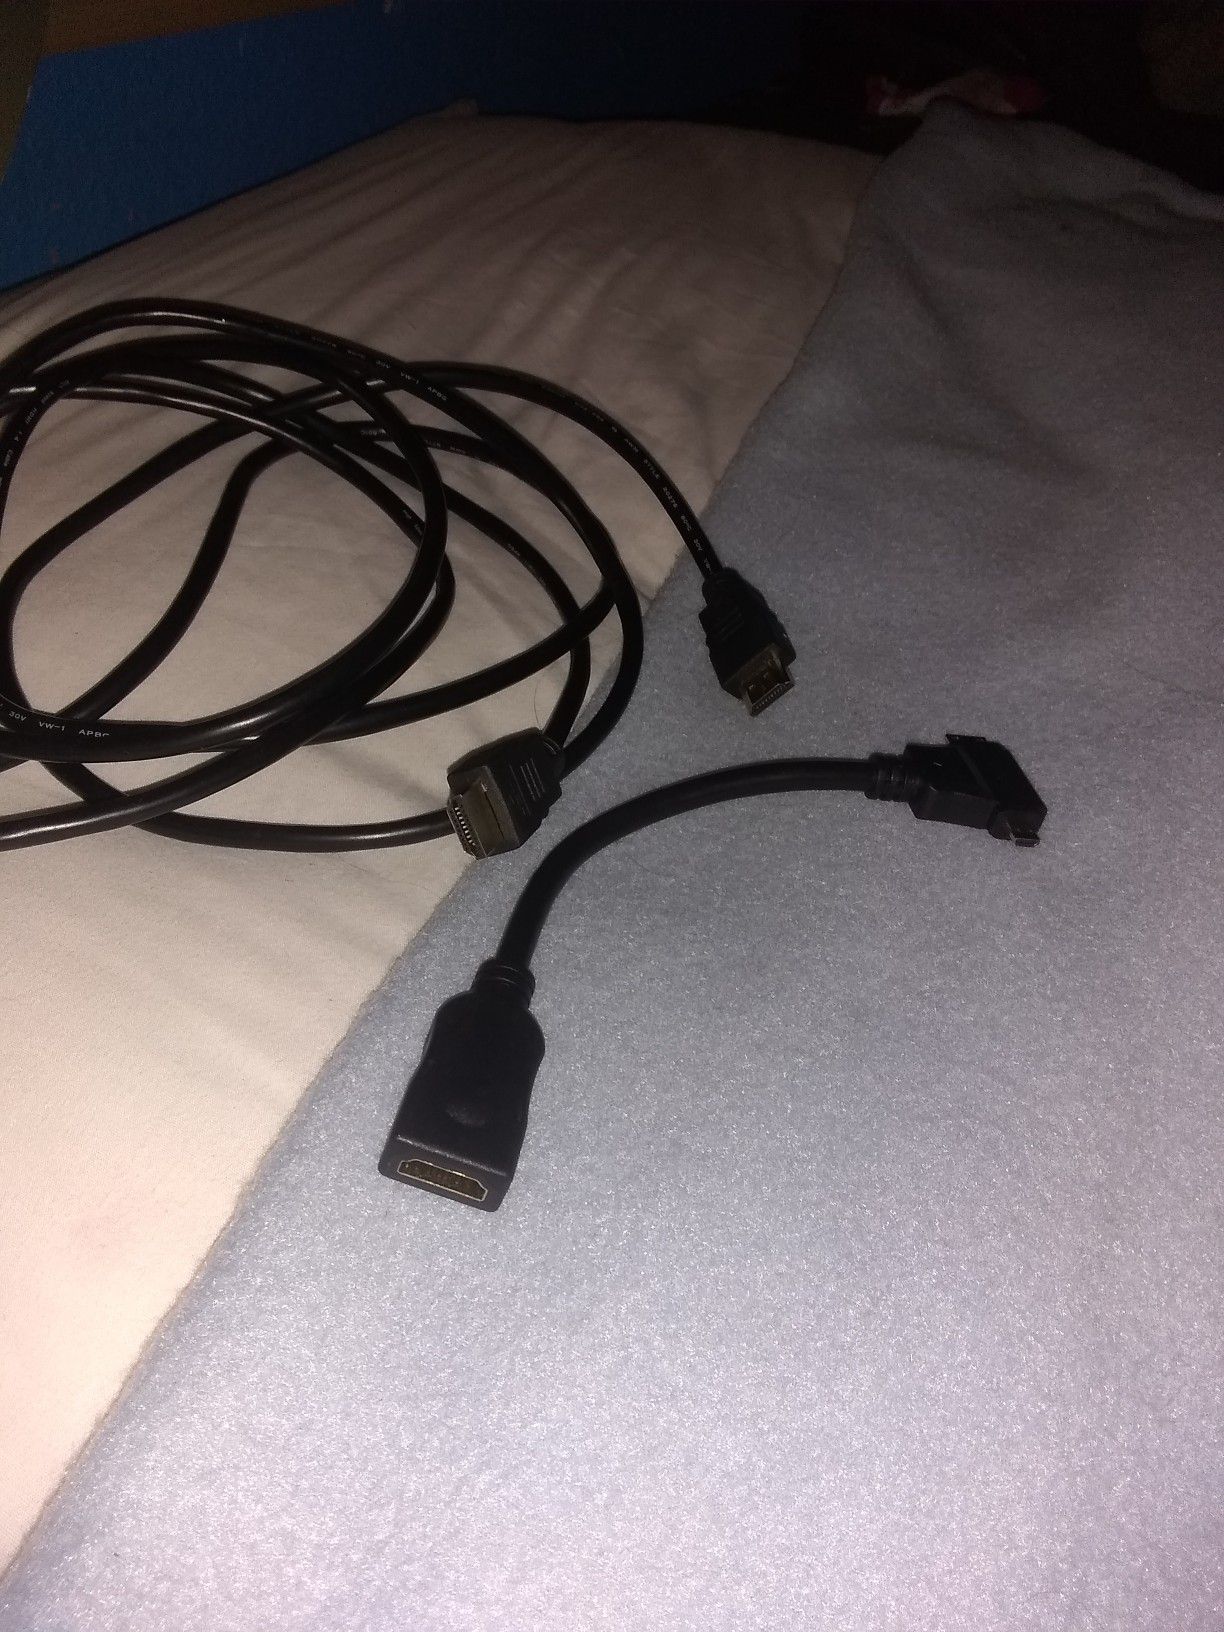 HDMI cord plus adapter$20